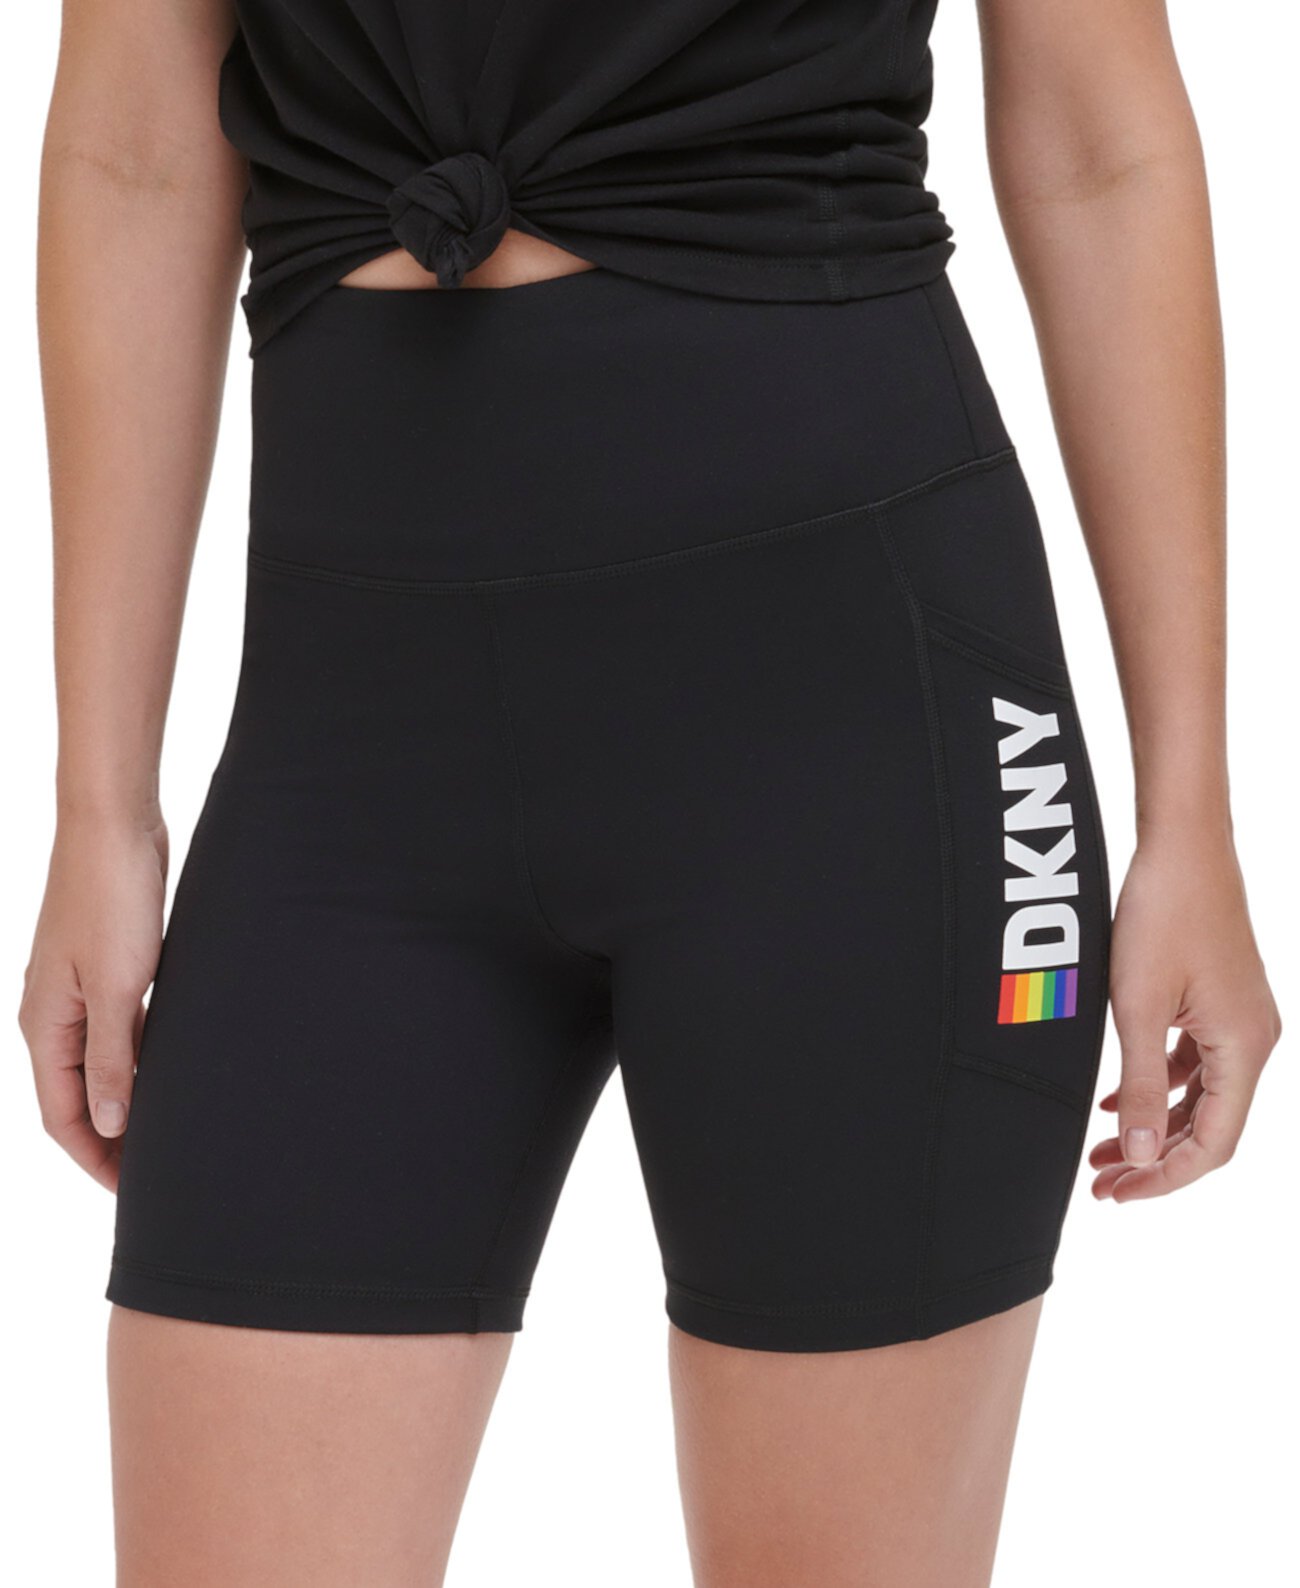 Women's Rainbow Pride High Rise Bike Shorts DKNY